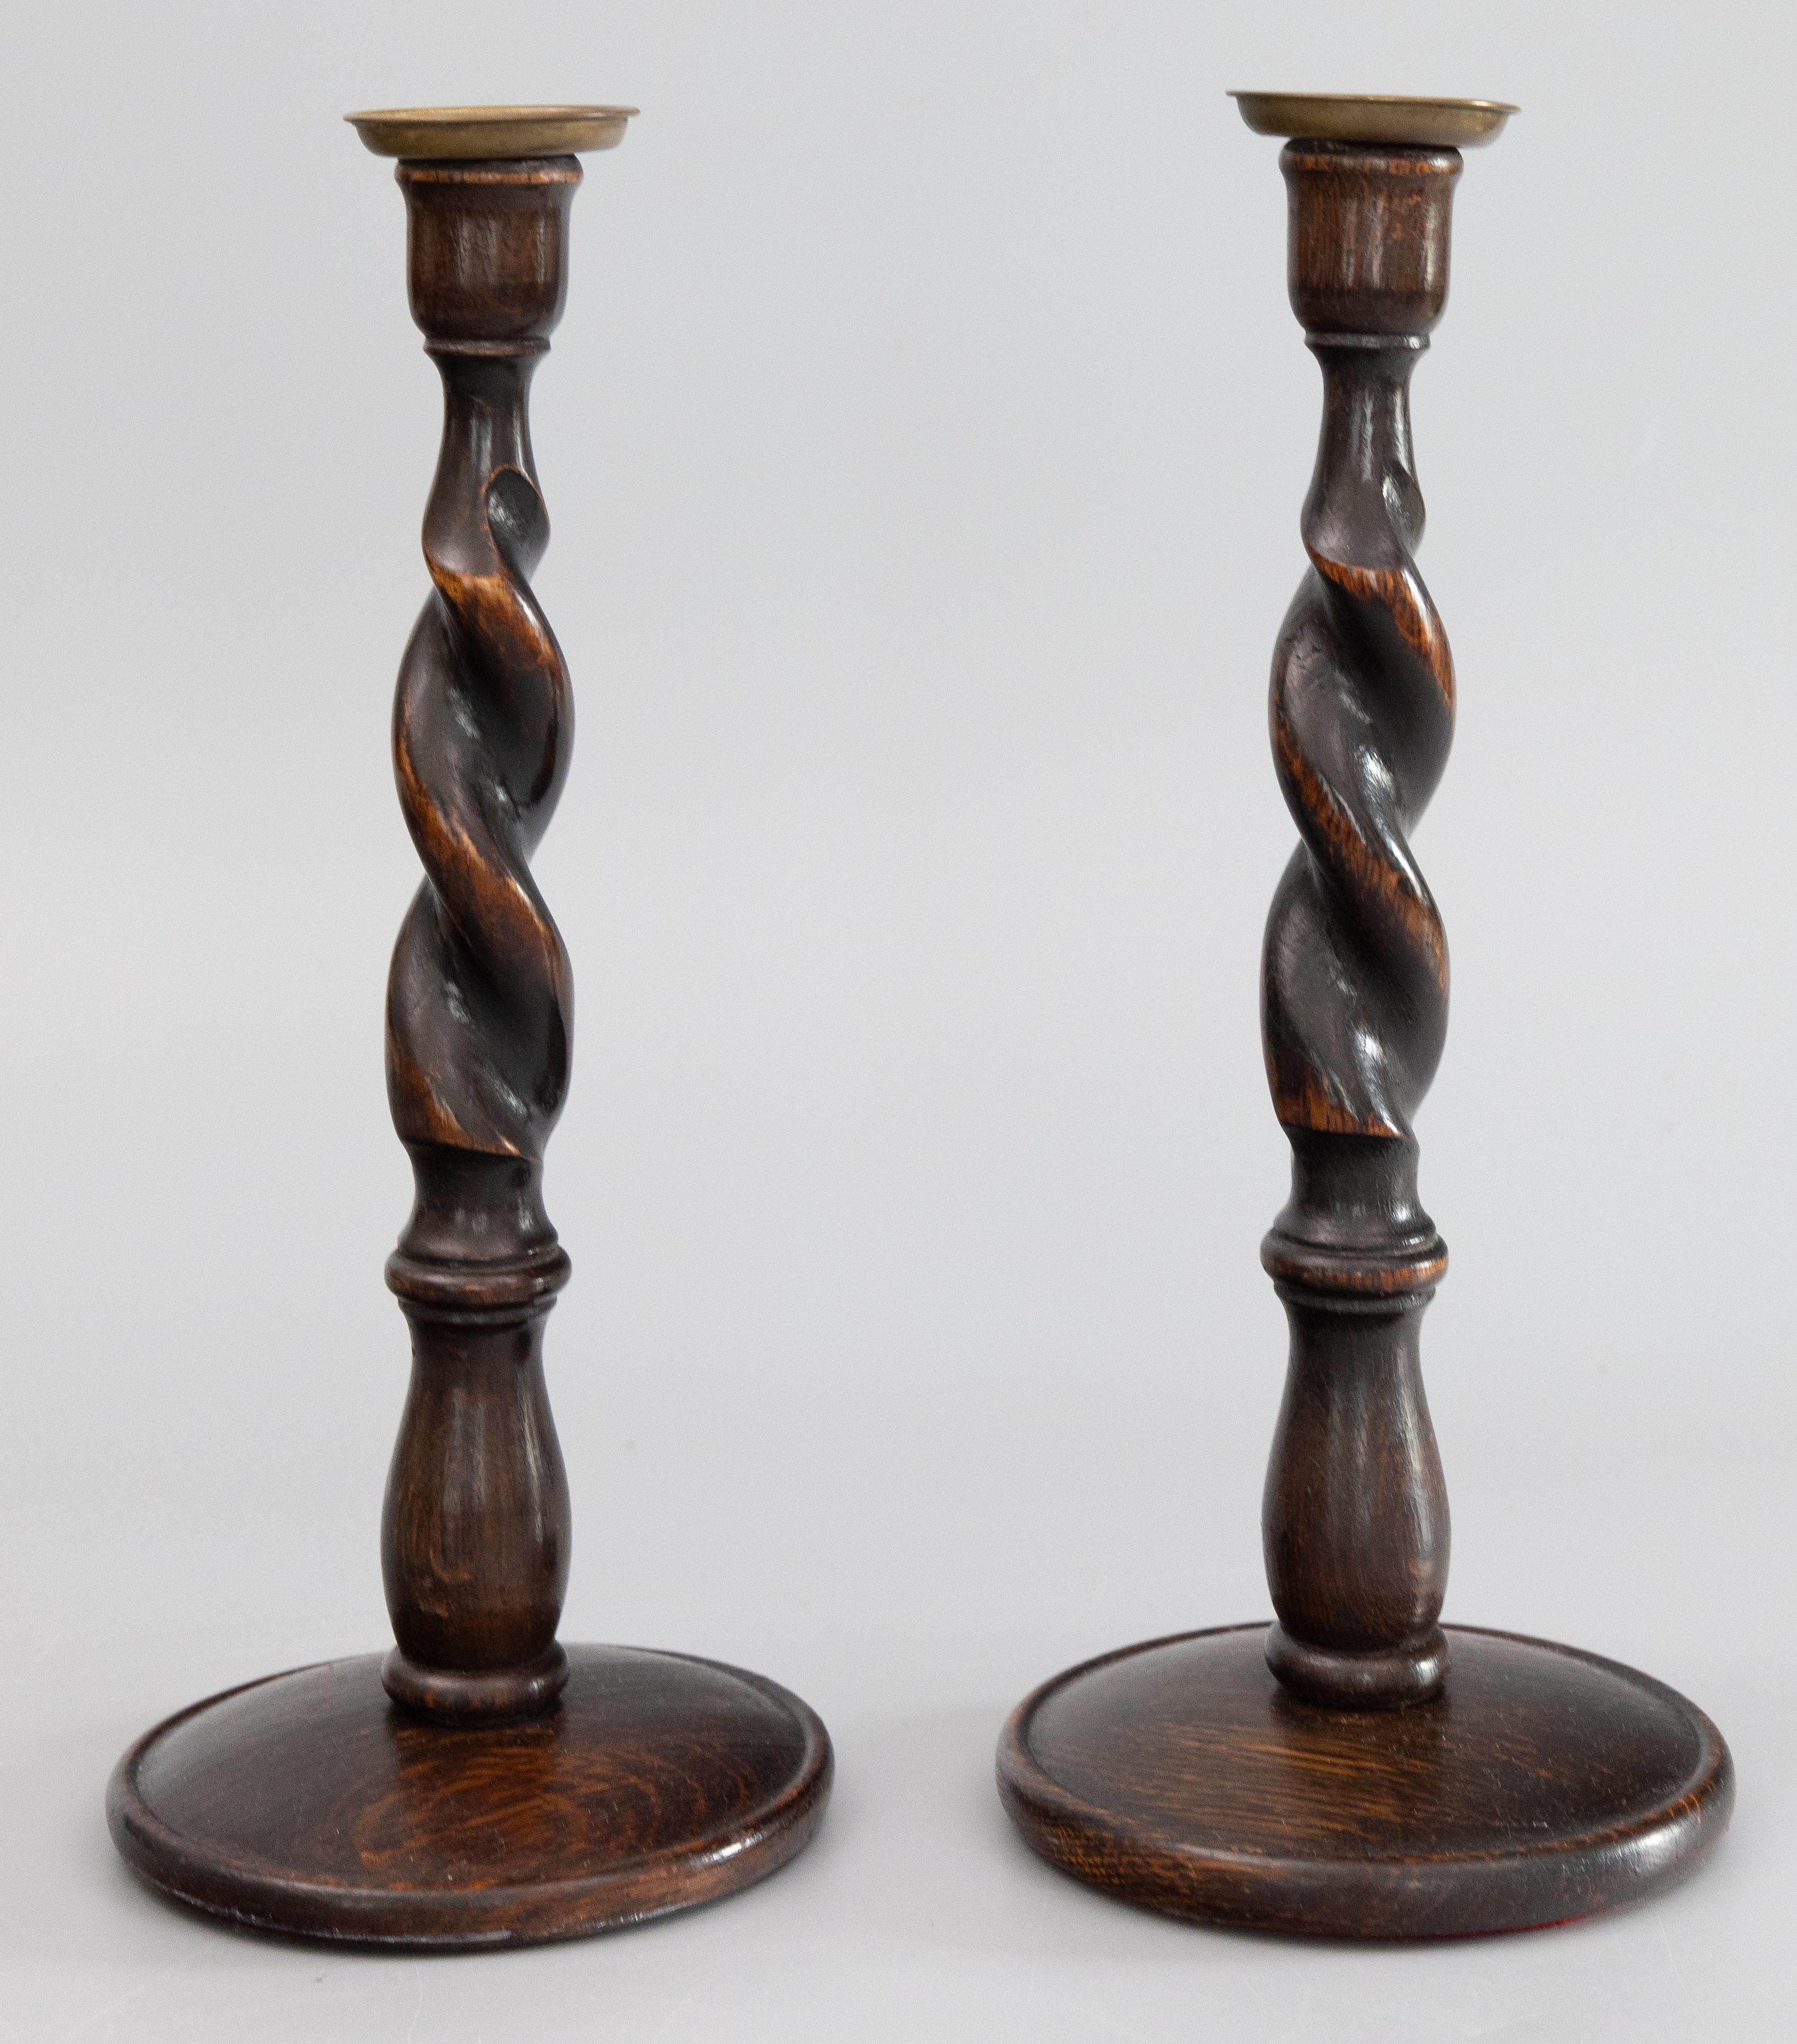 Pair of Antique English Oak Barley Twist Candlesticks, circa 1900 For Sale 2